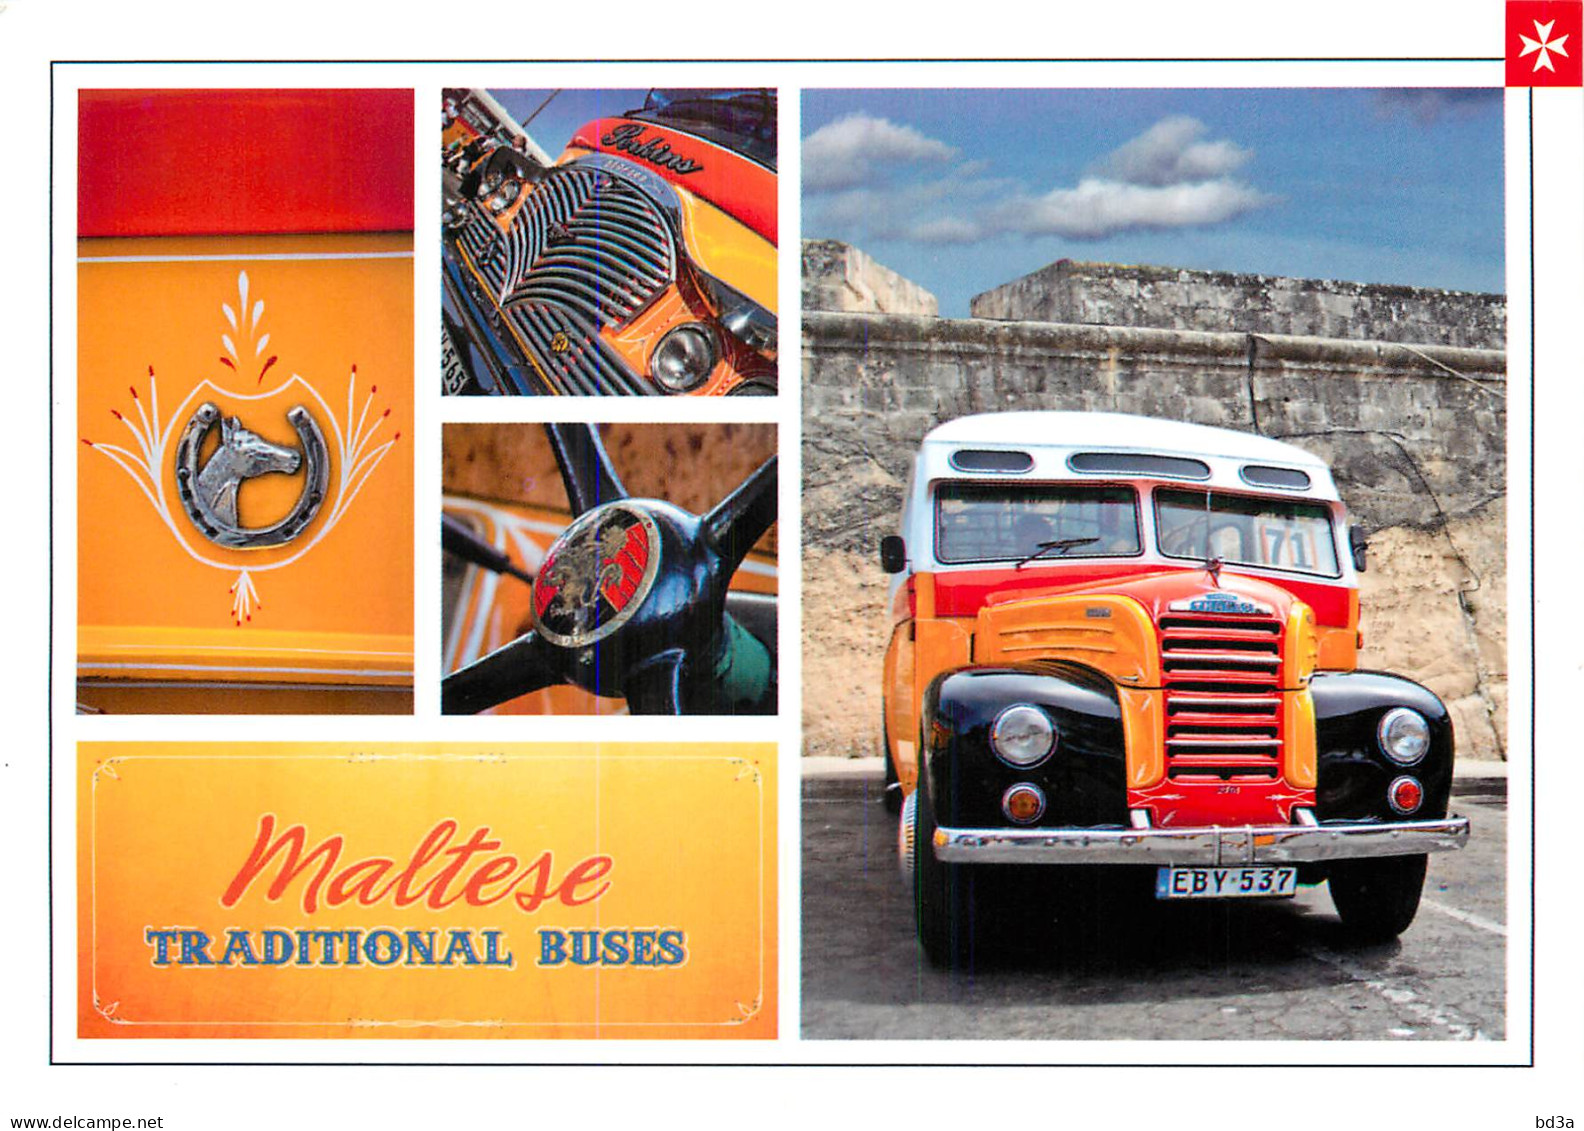  MALTE  MALTA  TRADITIONAL BUSES - Malta